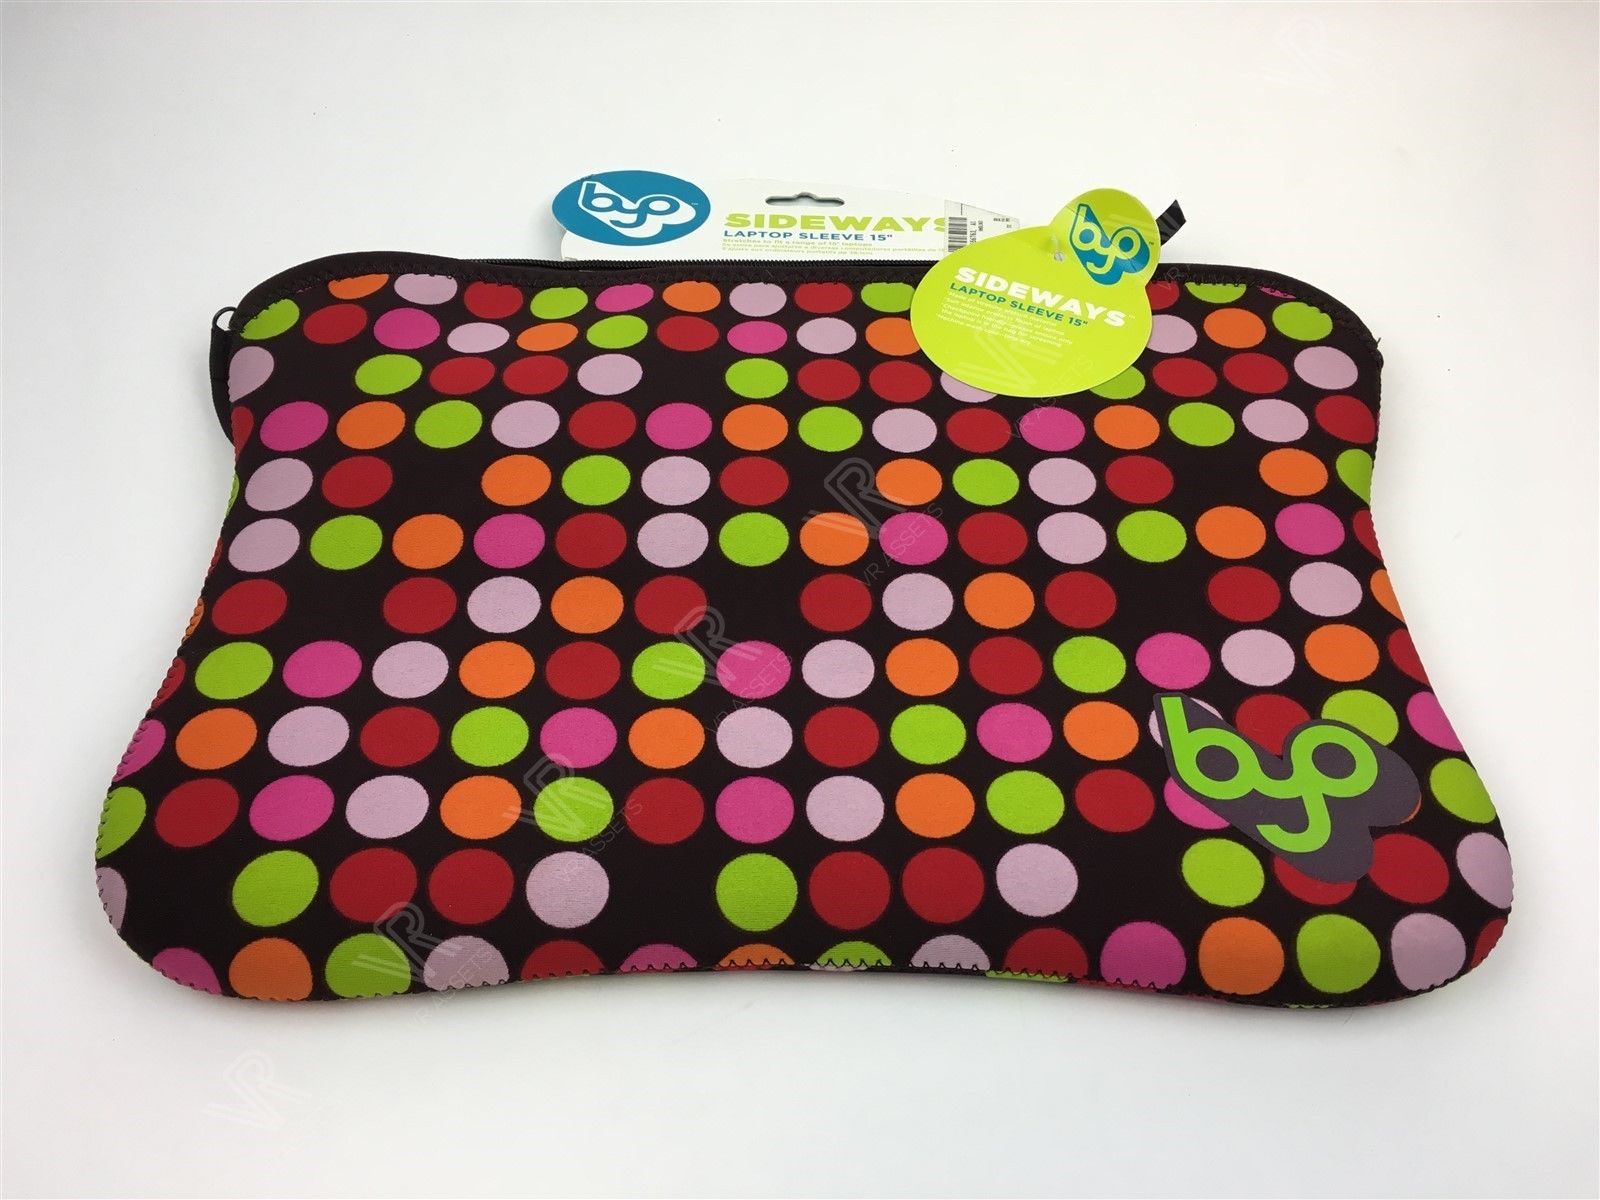 New Sideway Laptop Sleeve 15" Multicolor Zipper Bag Carry Case 12"-13"